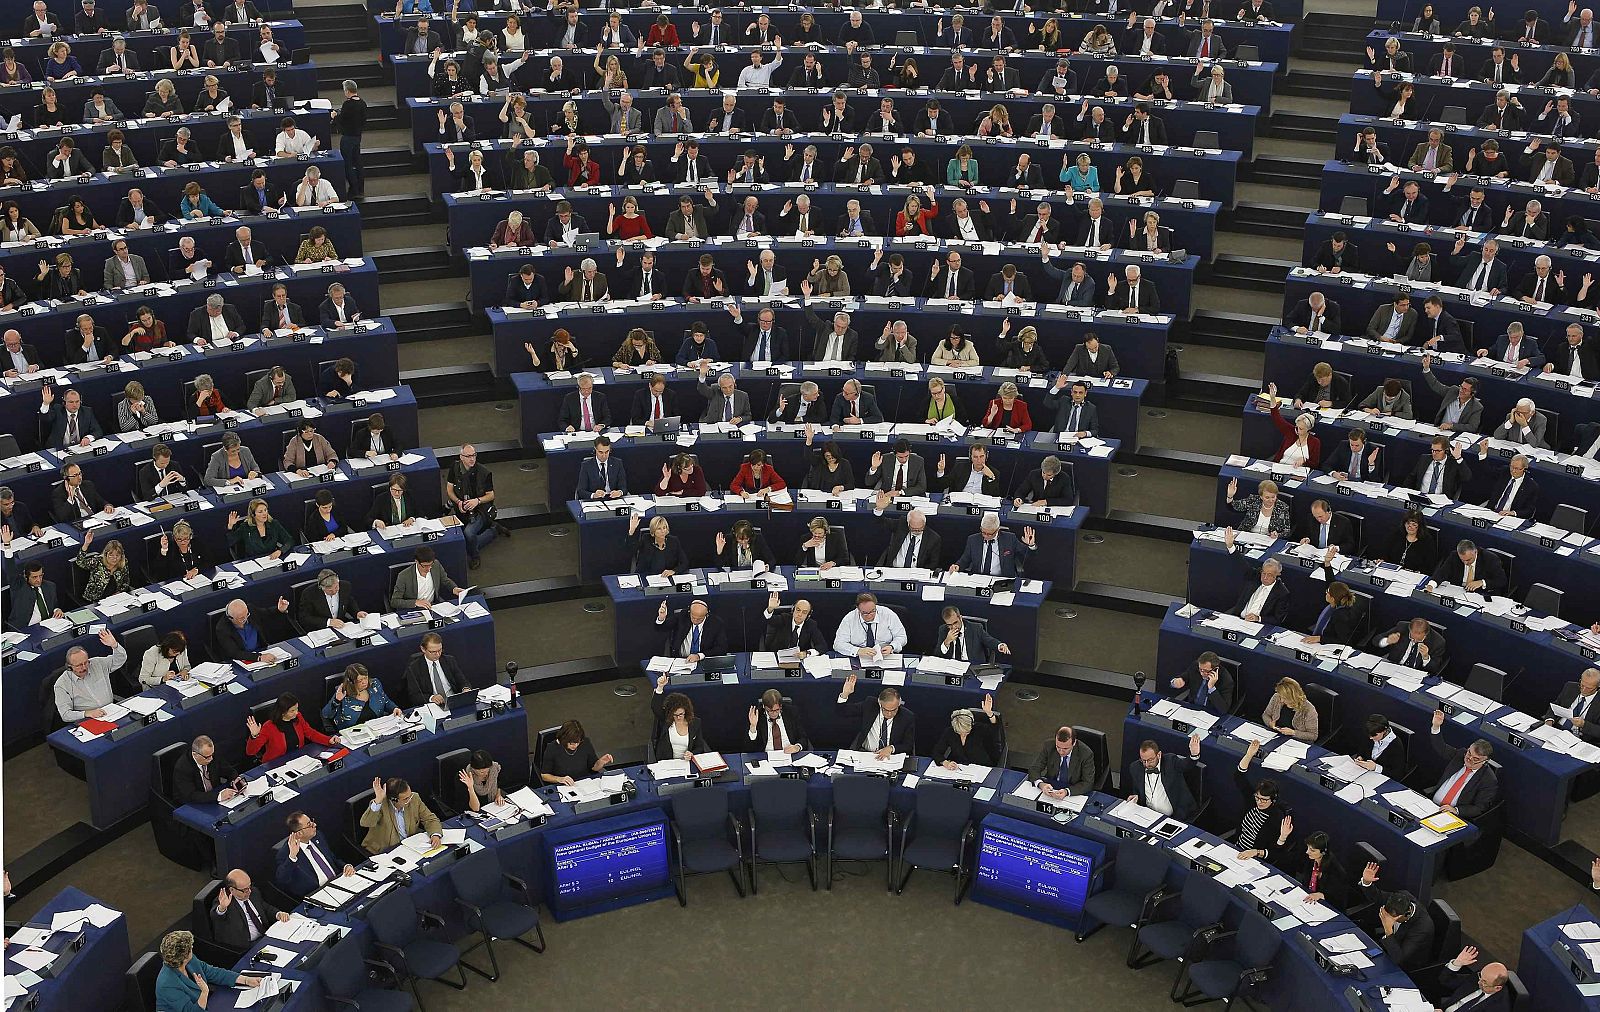 Members of the European Parliament take part in a voting session at the European Parliament in Strasbourg